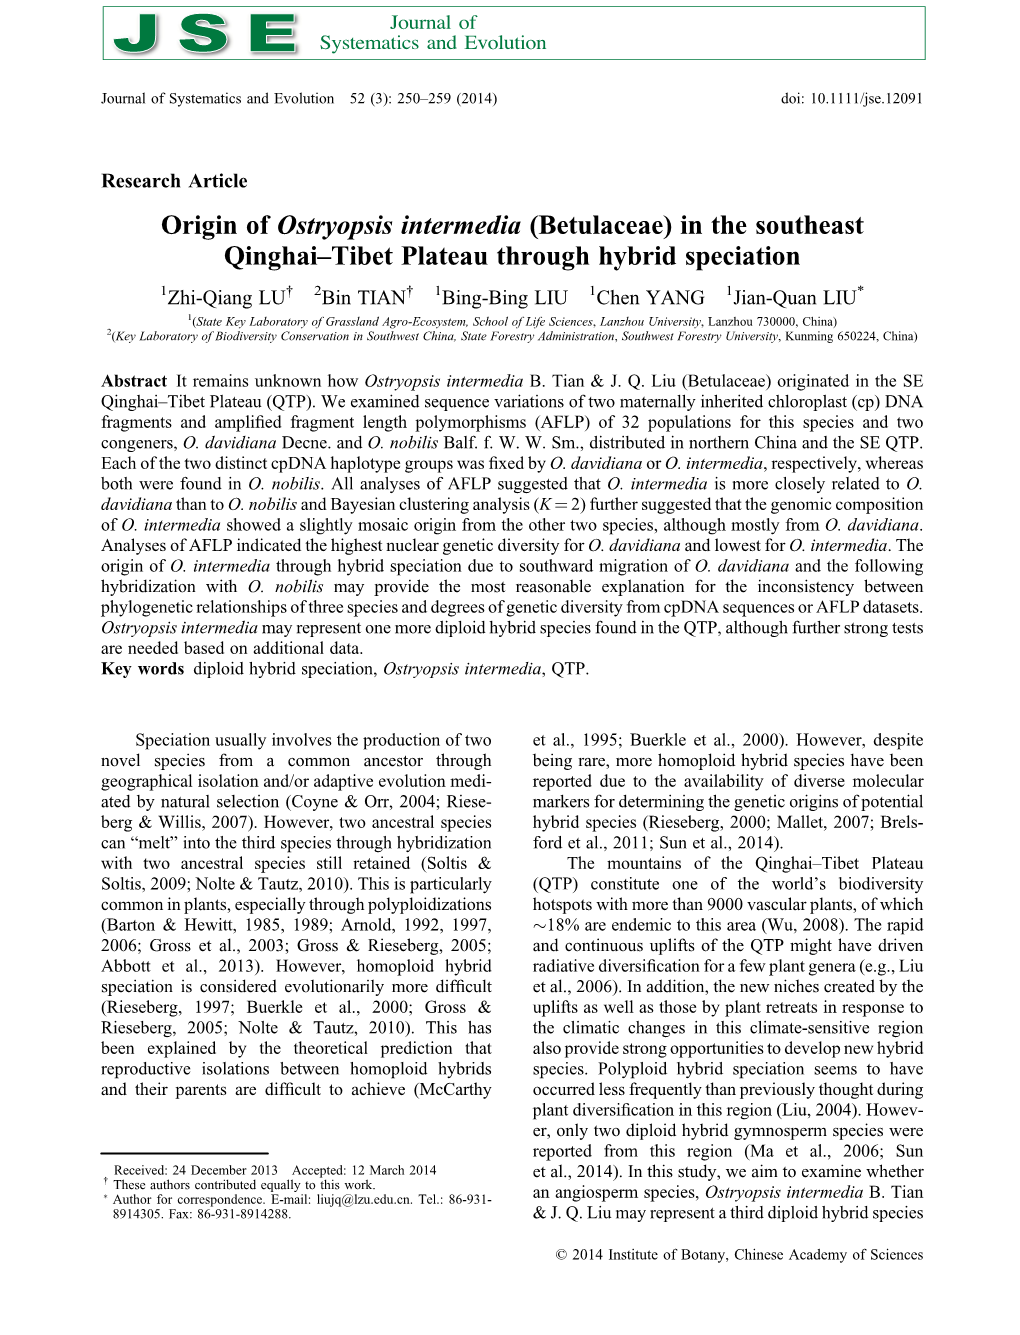 Origin of Ostryopsis Intermedia (Betulaceae) in the Southeast Qinghaitibet Plateau Through Hybrid Speciation